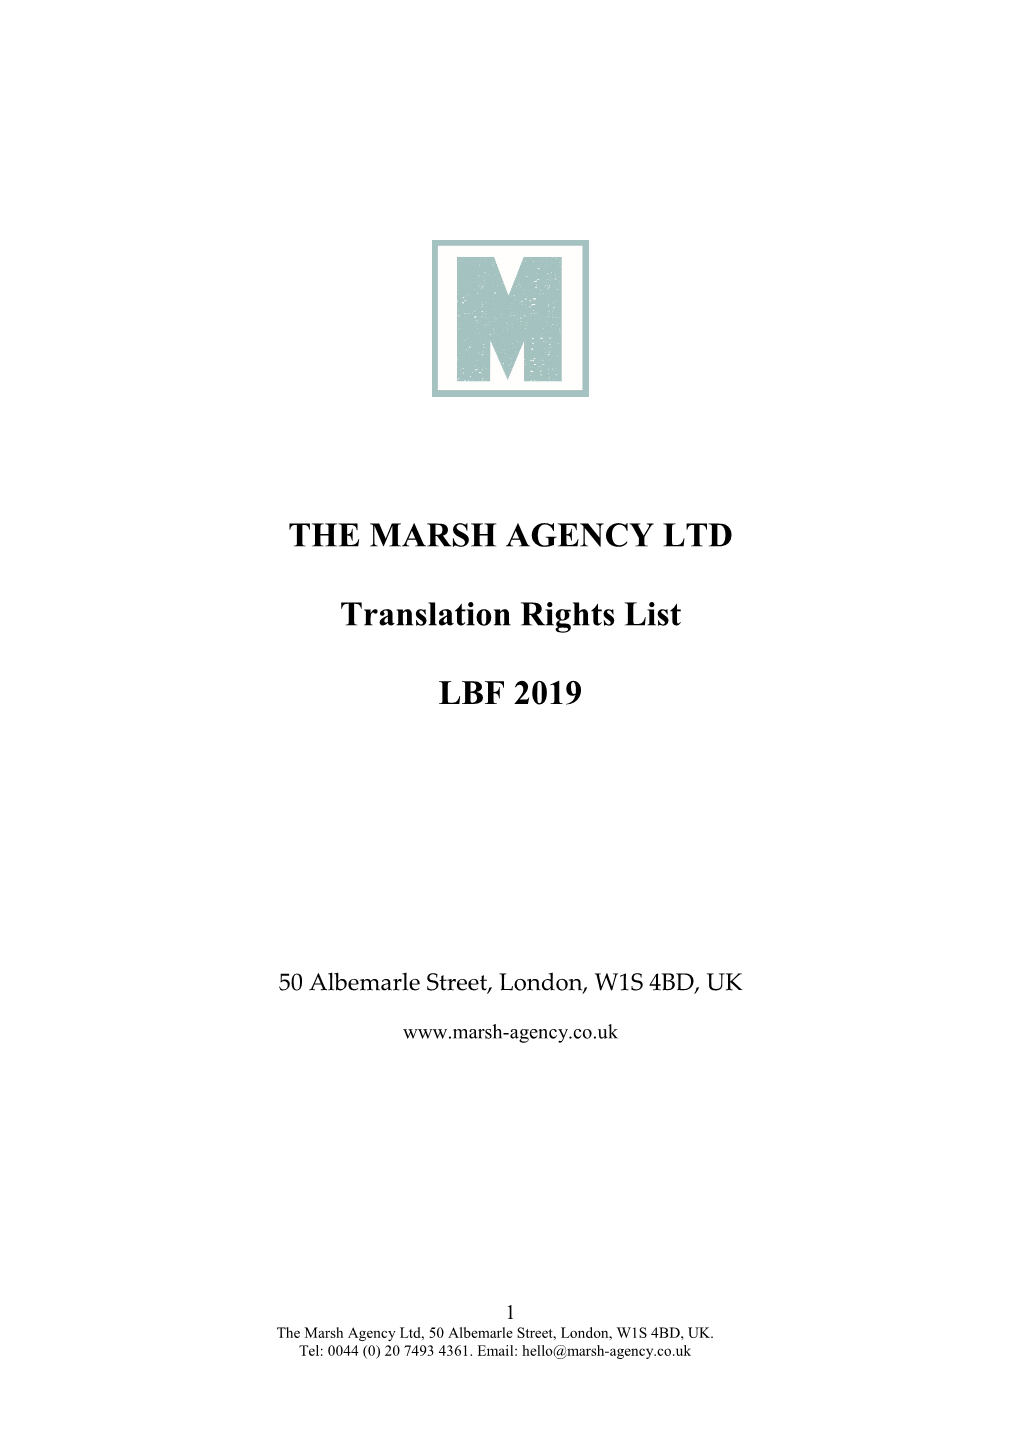 THE MARSH AGENCY LTD Translation Rights List LBF 2019